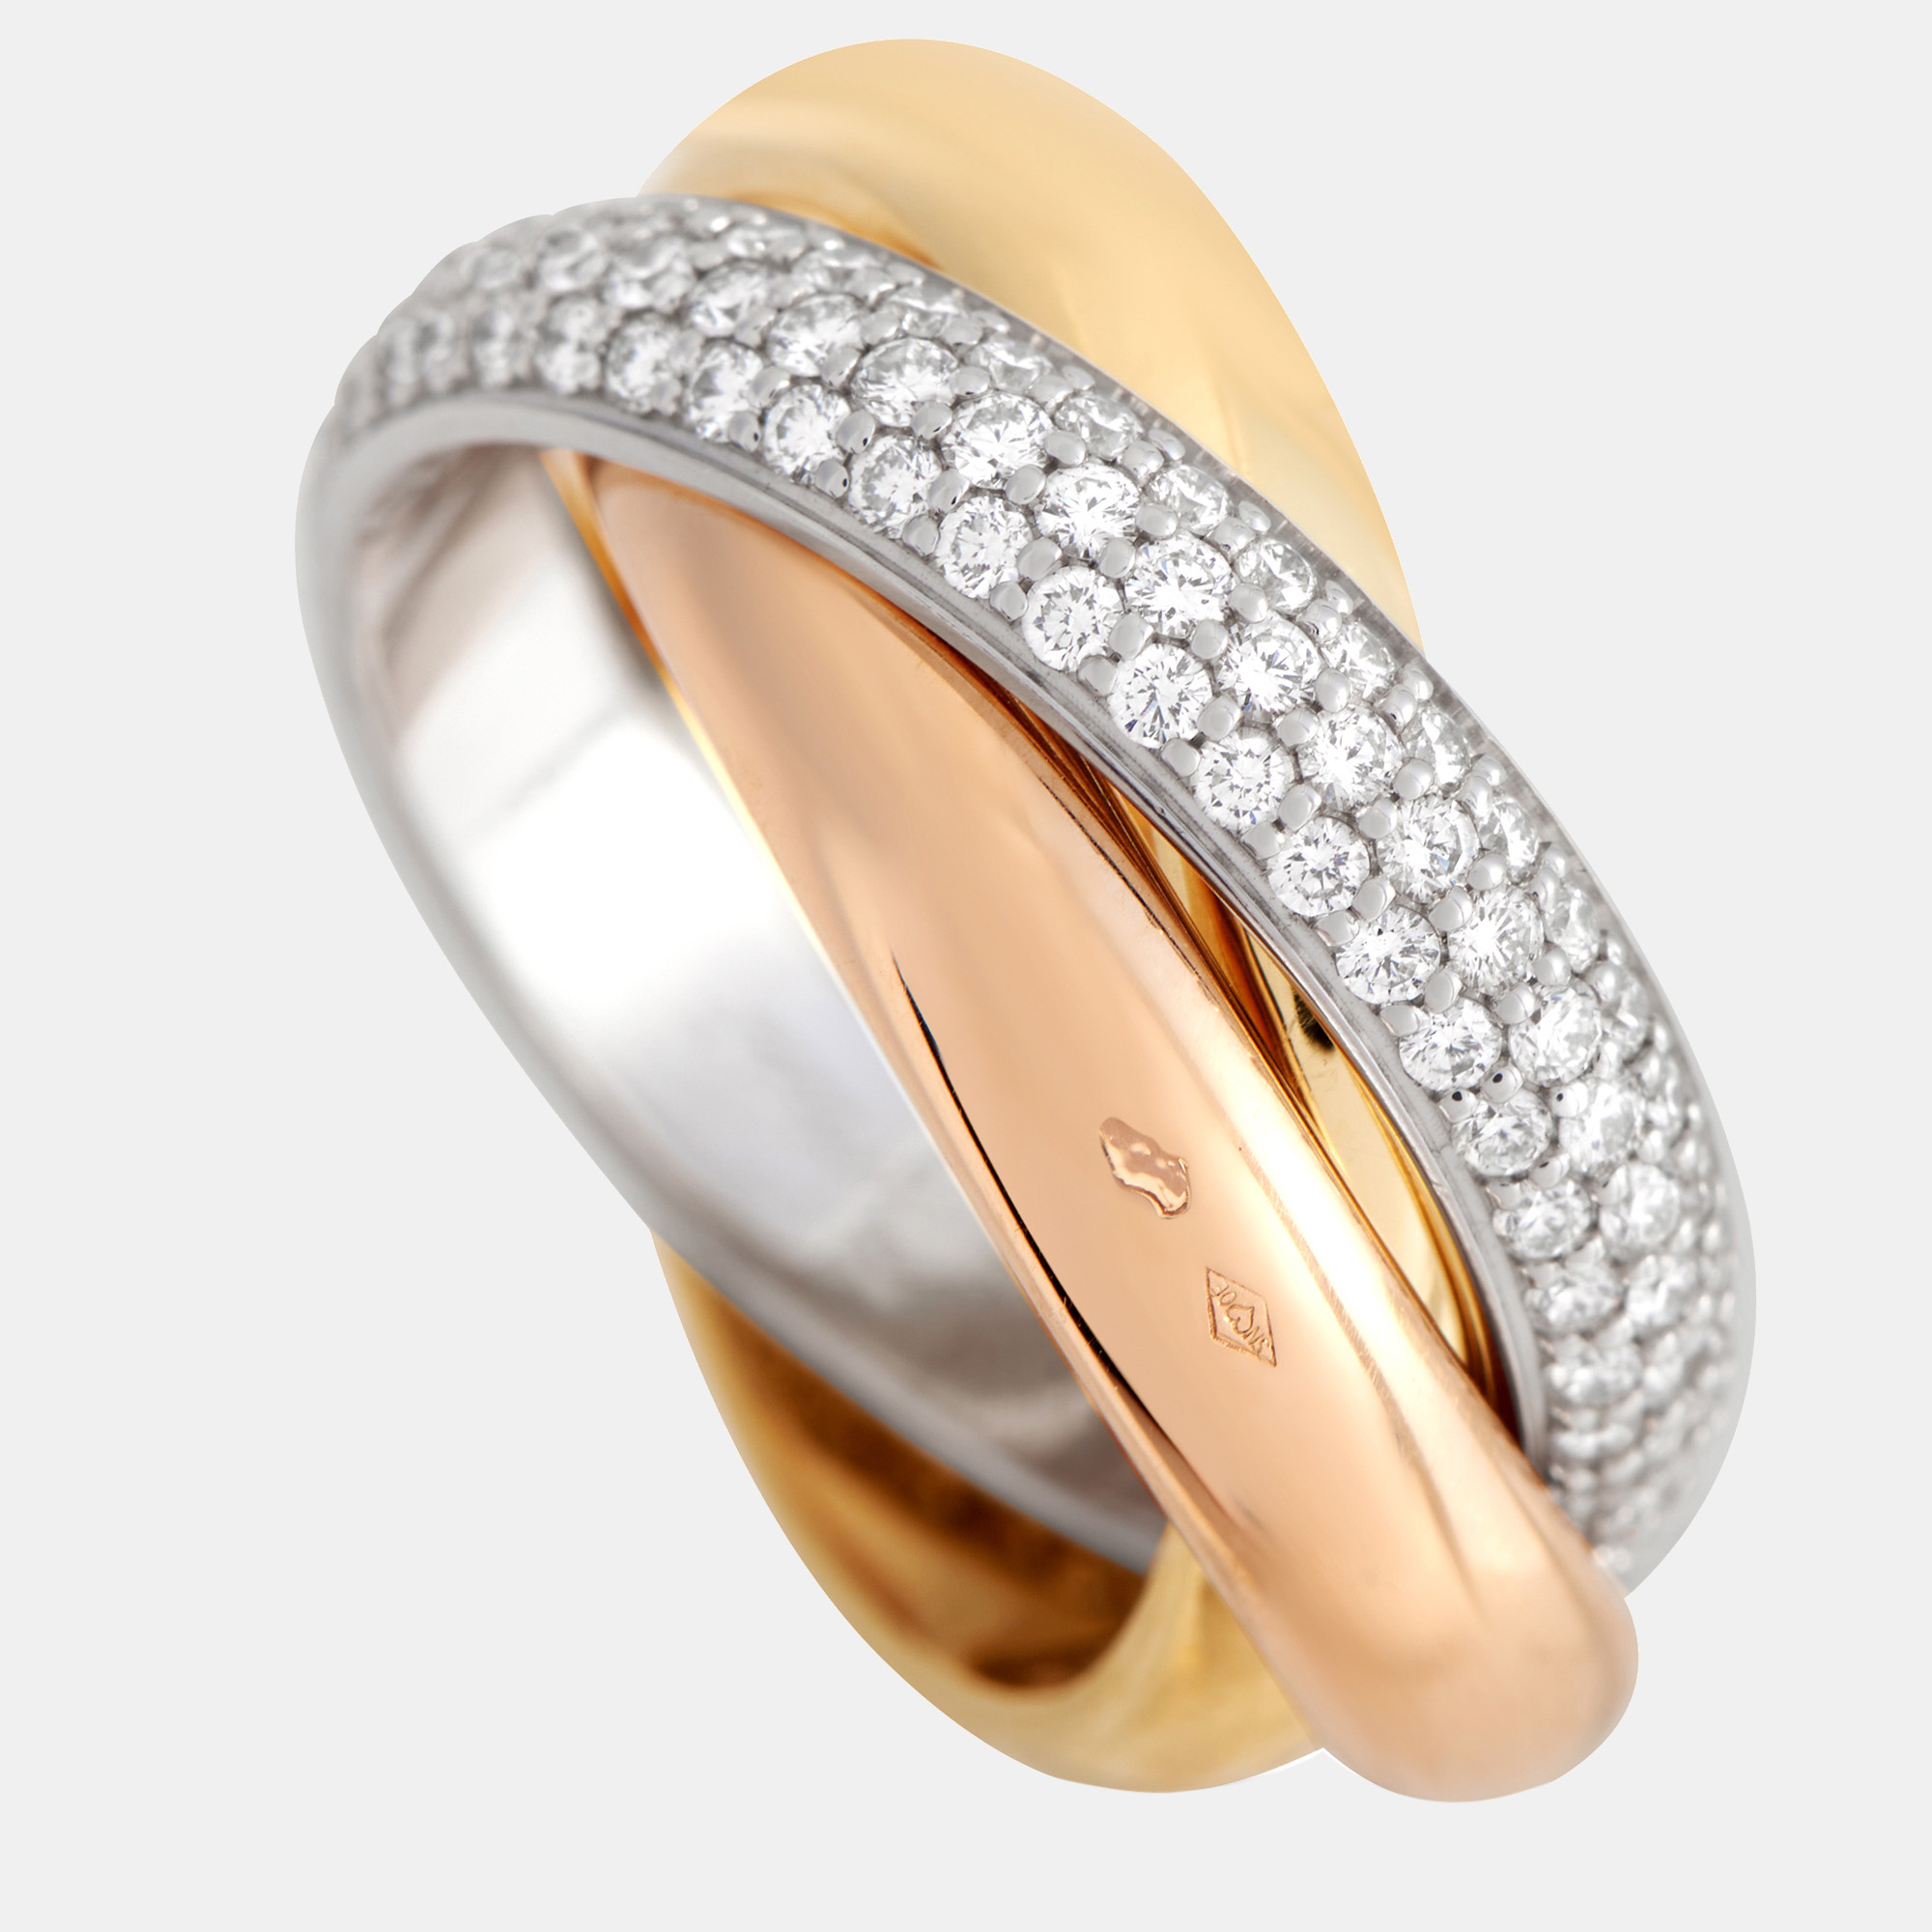 Cartier trinity 18k yellow gold, white gold, rose gold diamond ring